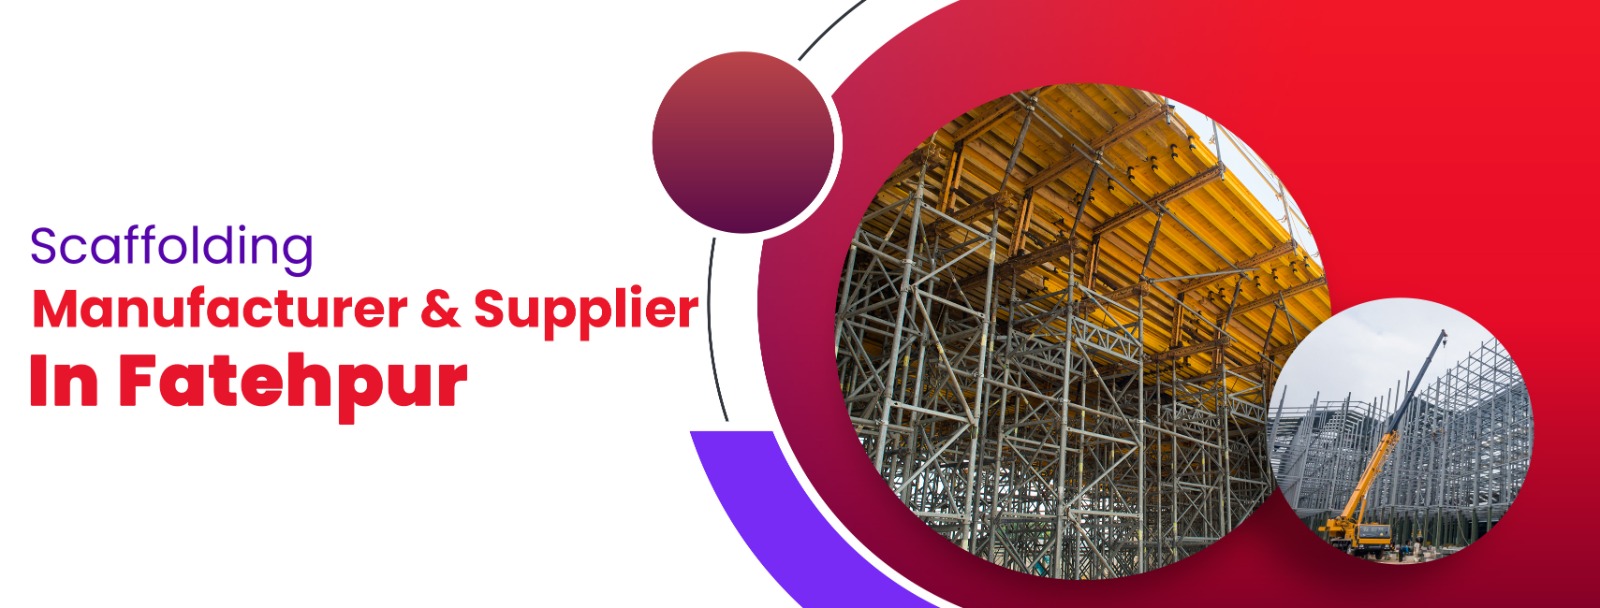 Scaffolding Manufacturer & Supplier In Fatehour